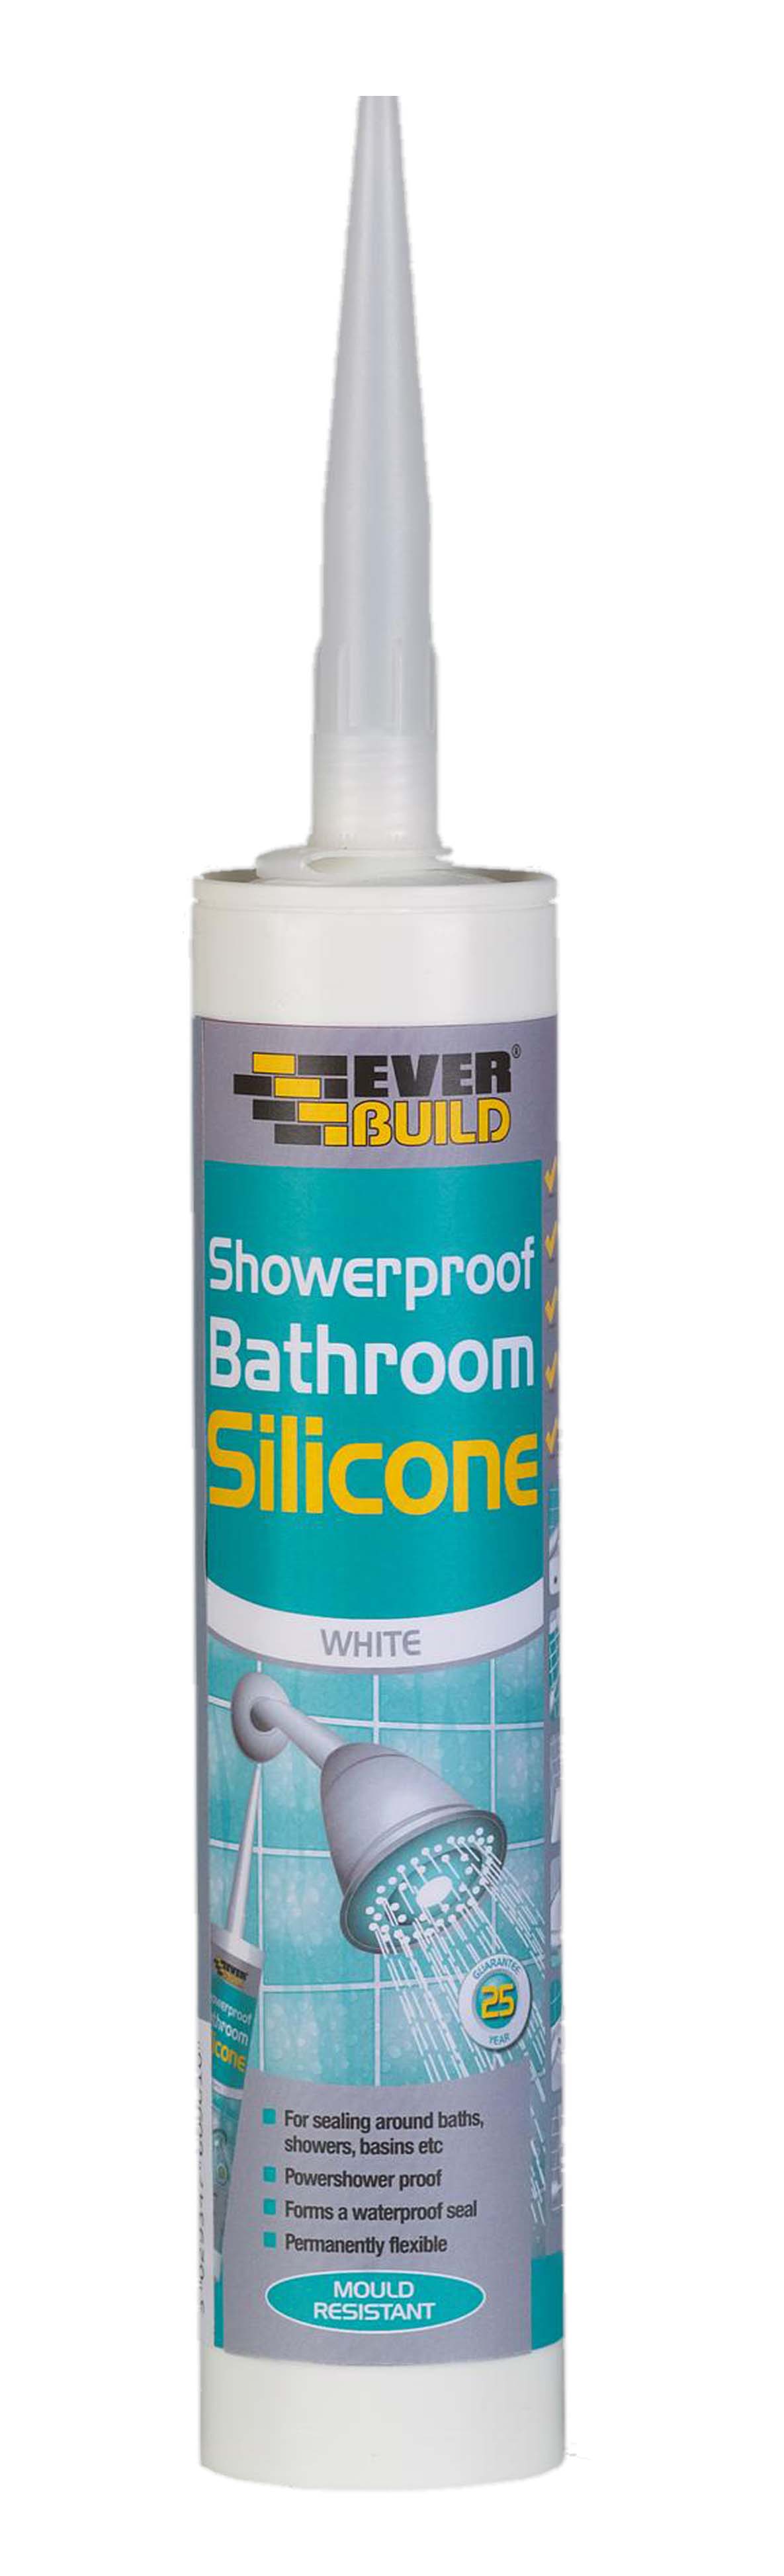 EVER BUILD SHOWERPROOF BATHROOM SILICON WHITE 290ML